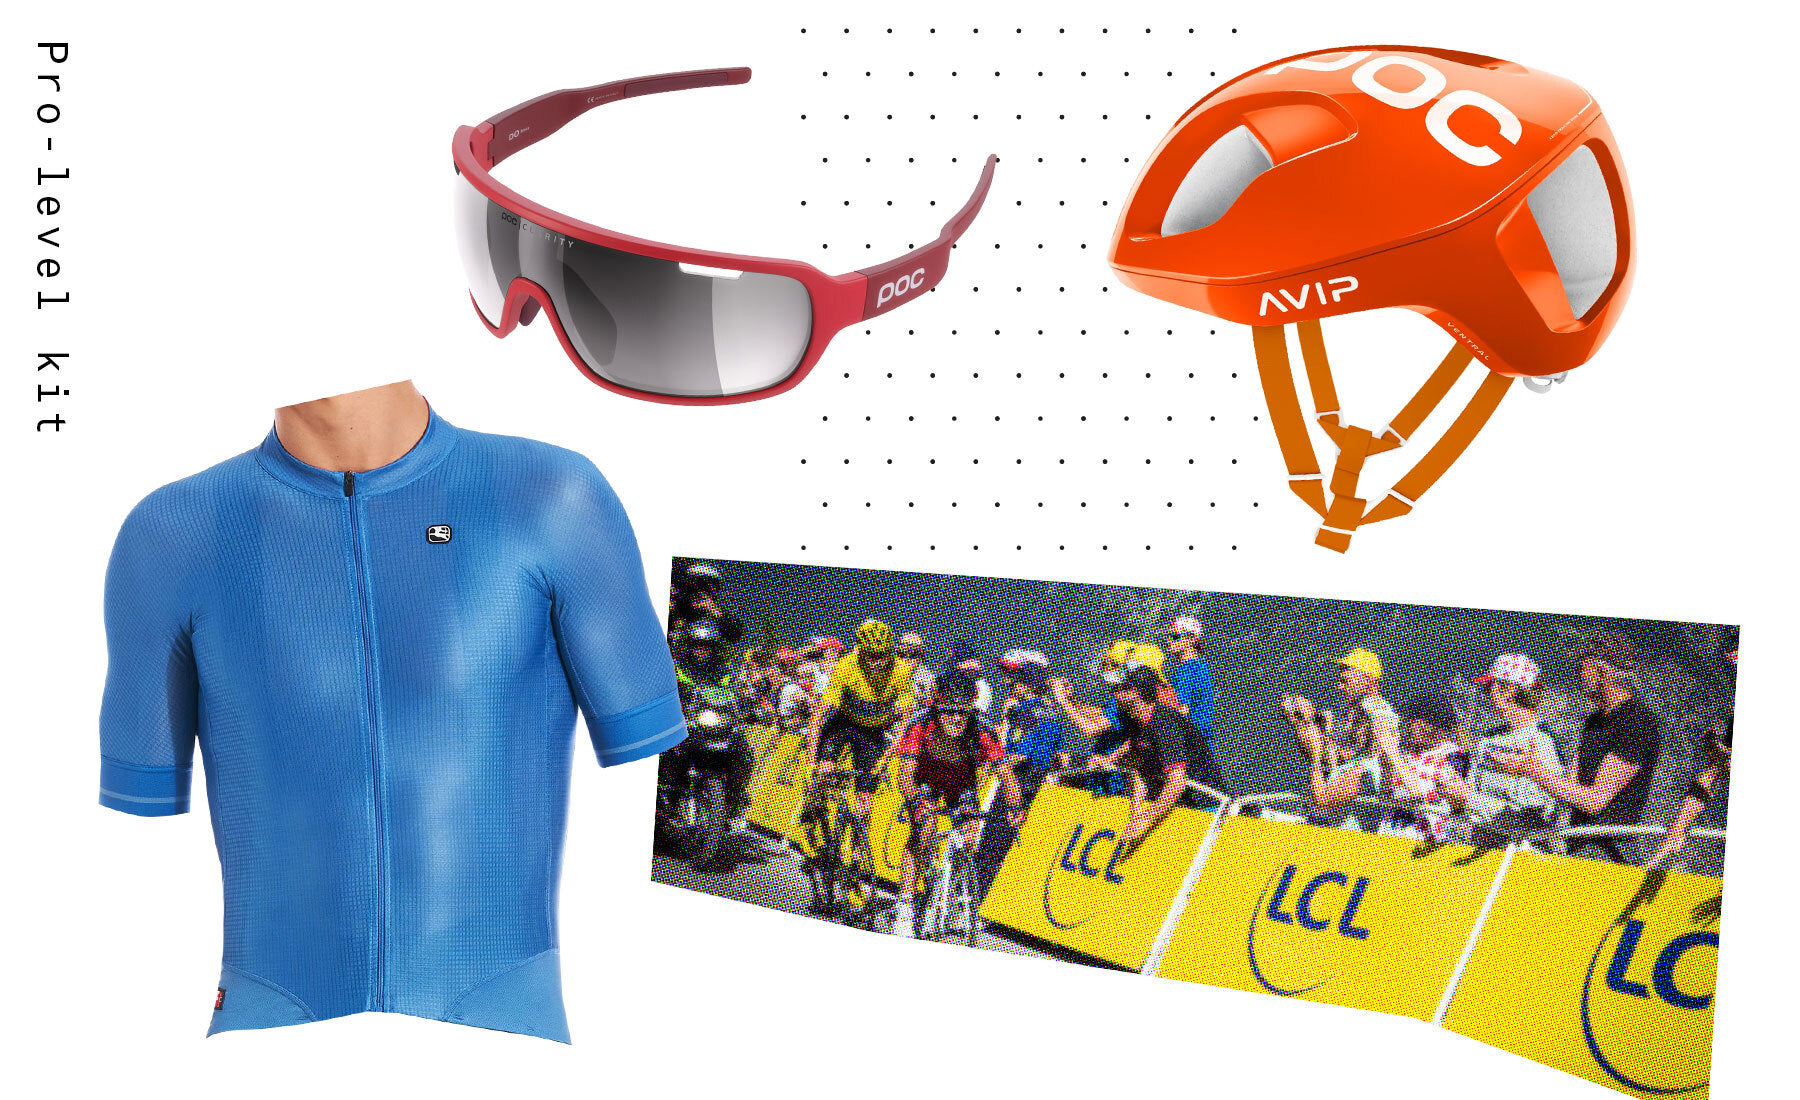 Tour de France pro level cycling apparel jerseys and bib shorts for sale